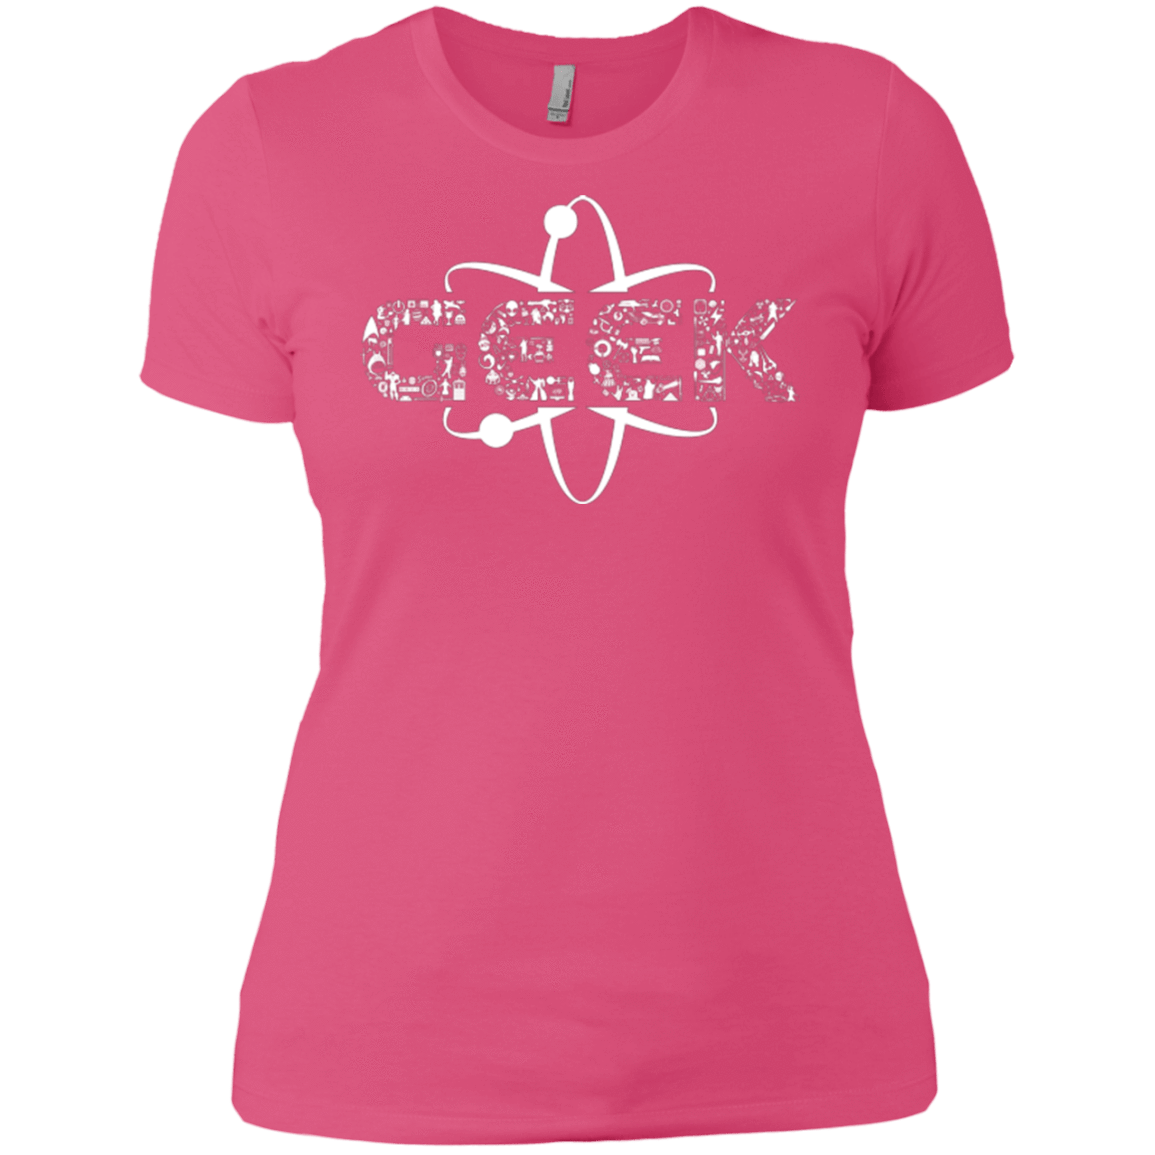 T-Shirts Hot Pink / X-Small I Geek Women's Premium T-Shirt